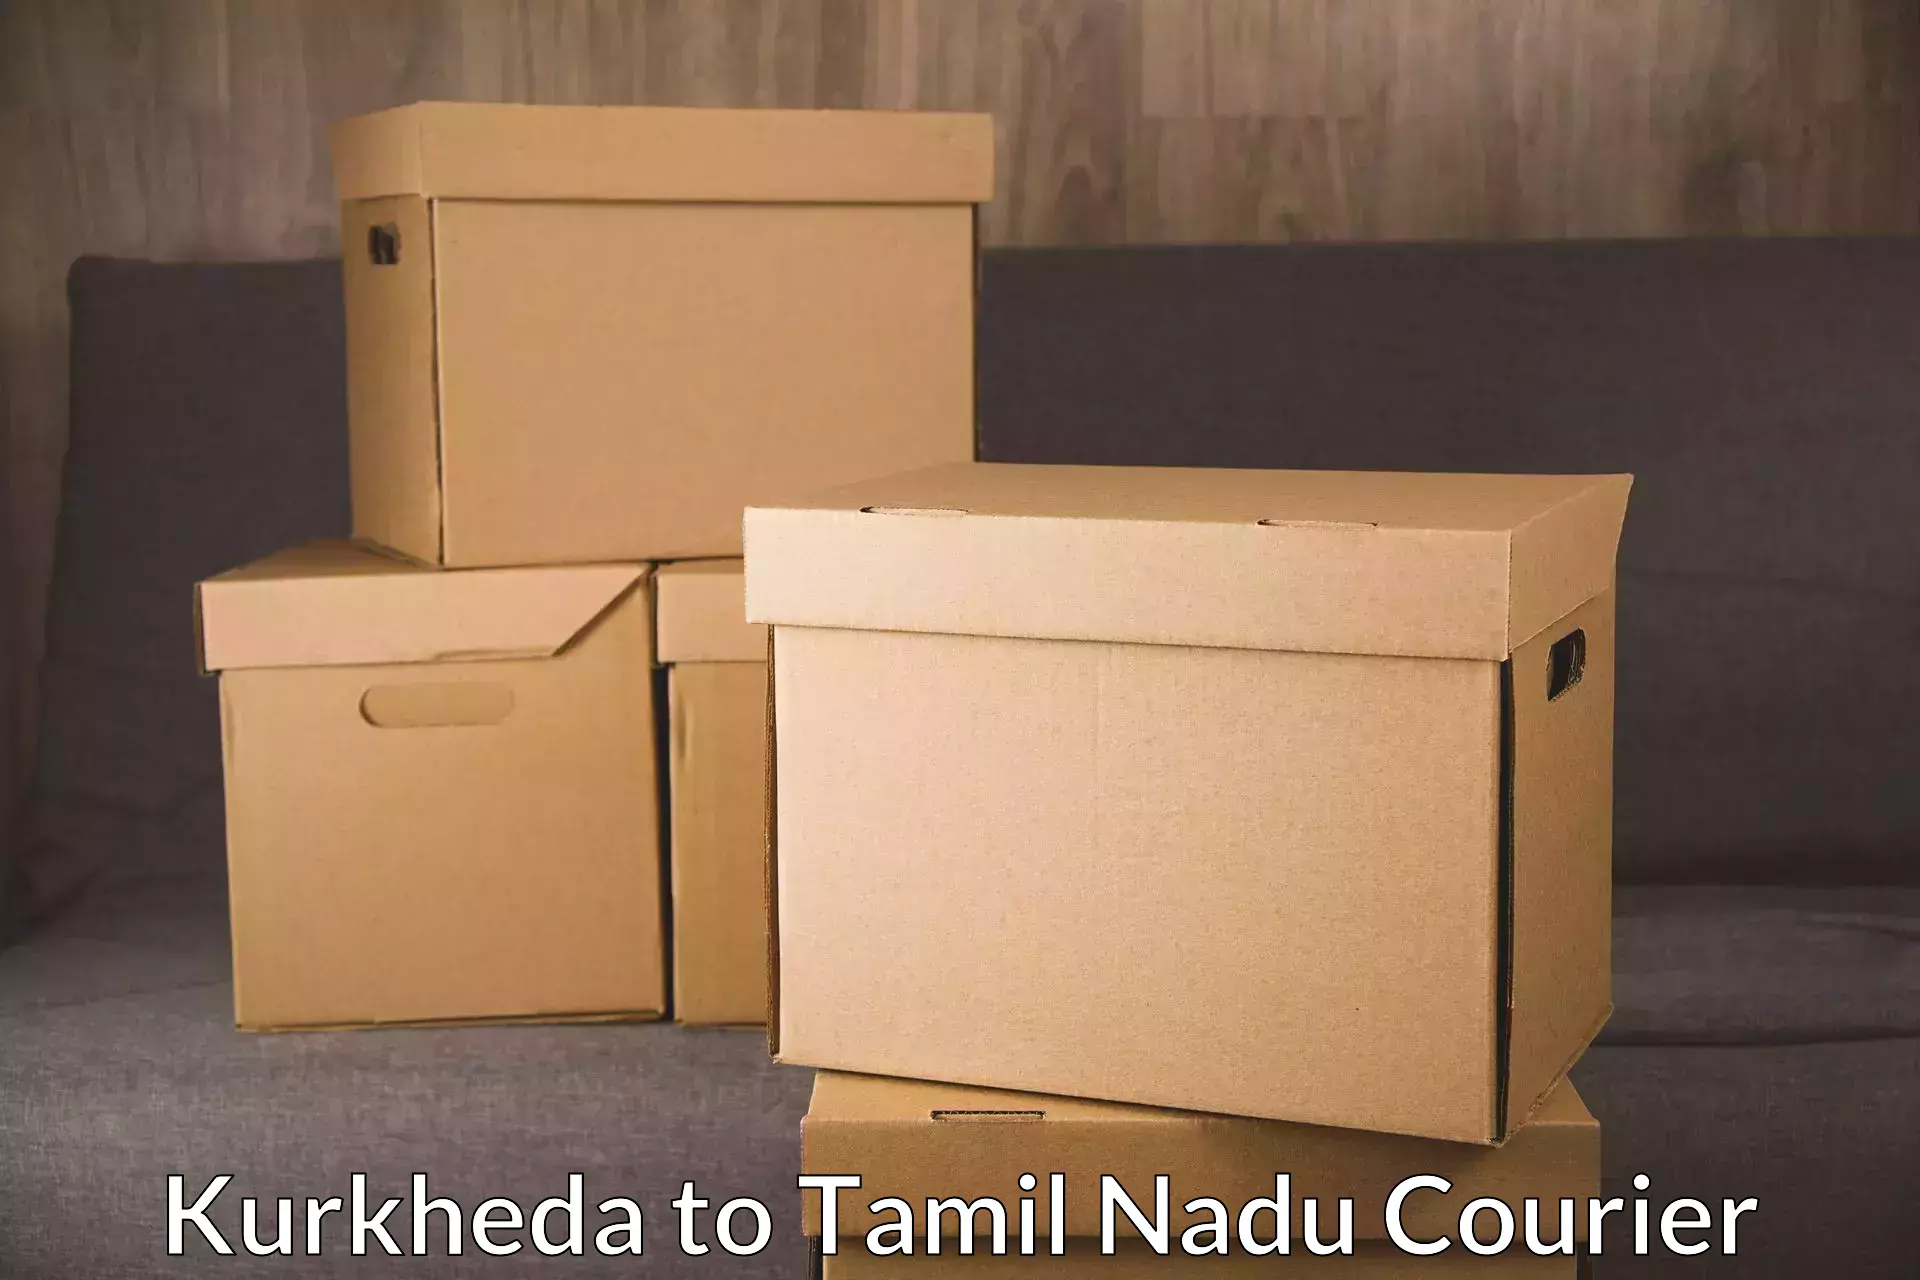 Cash on delivery service Kurkheda to Tamil Nadu